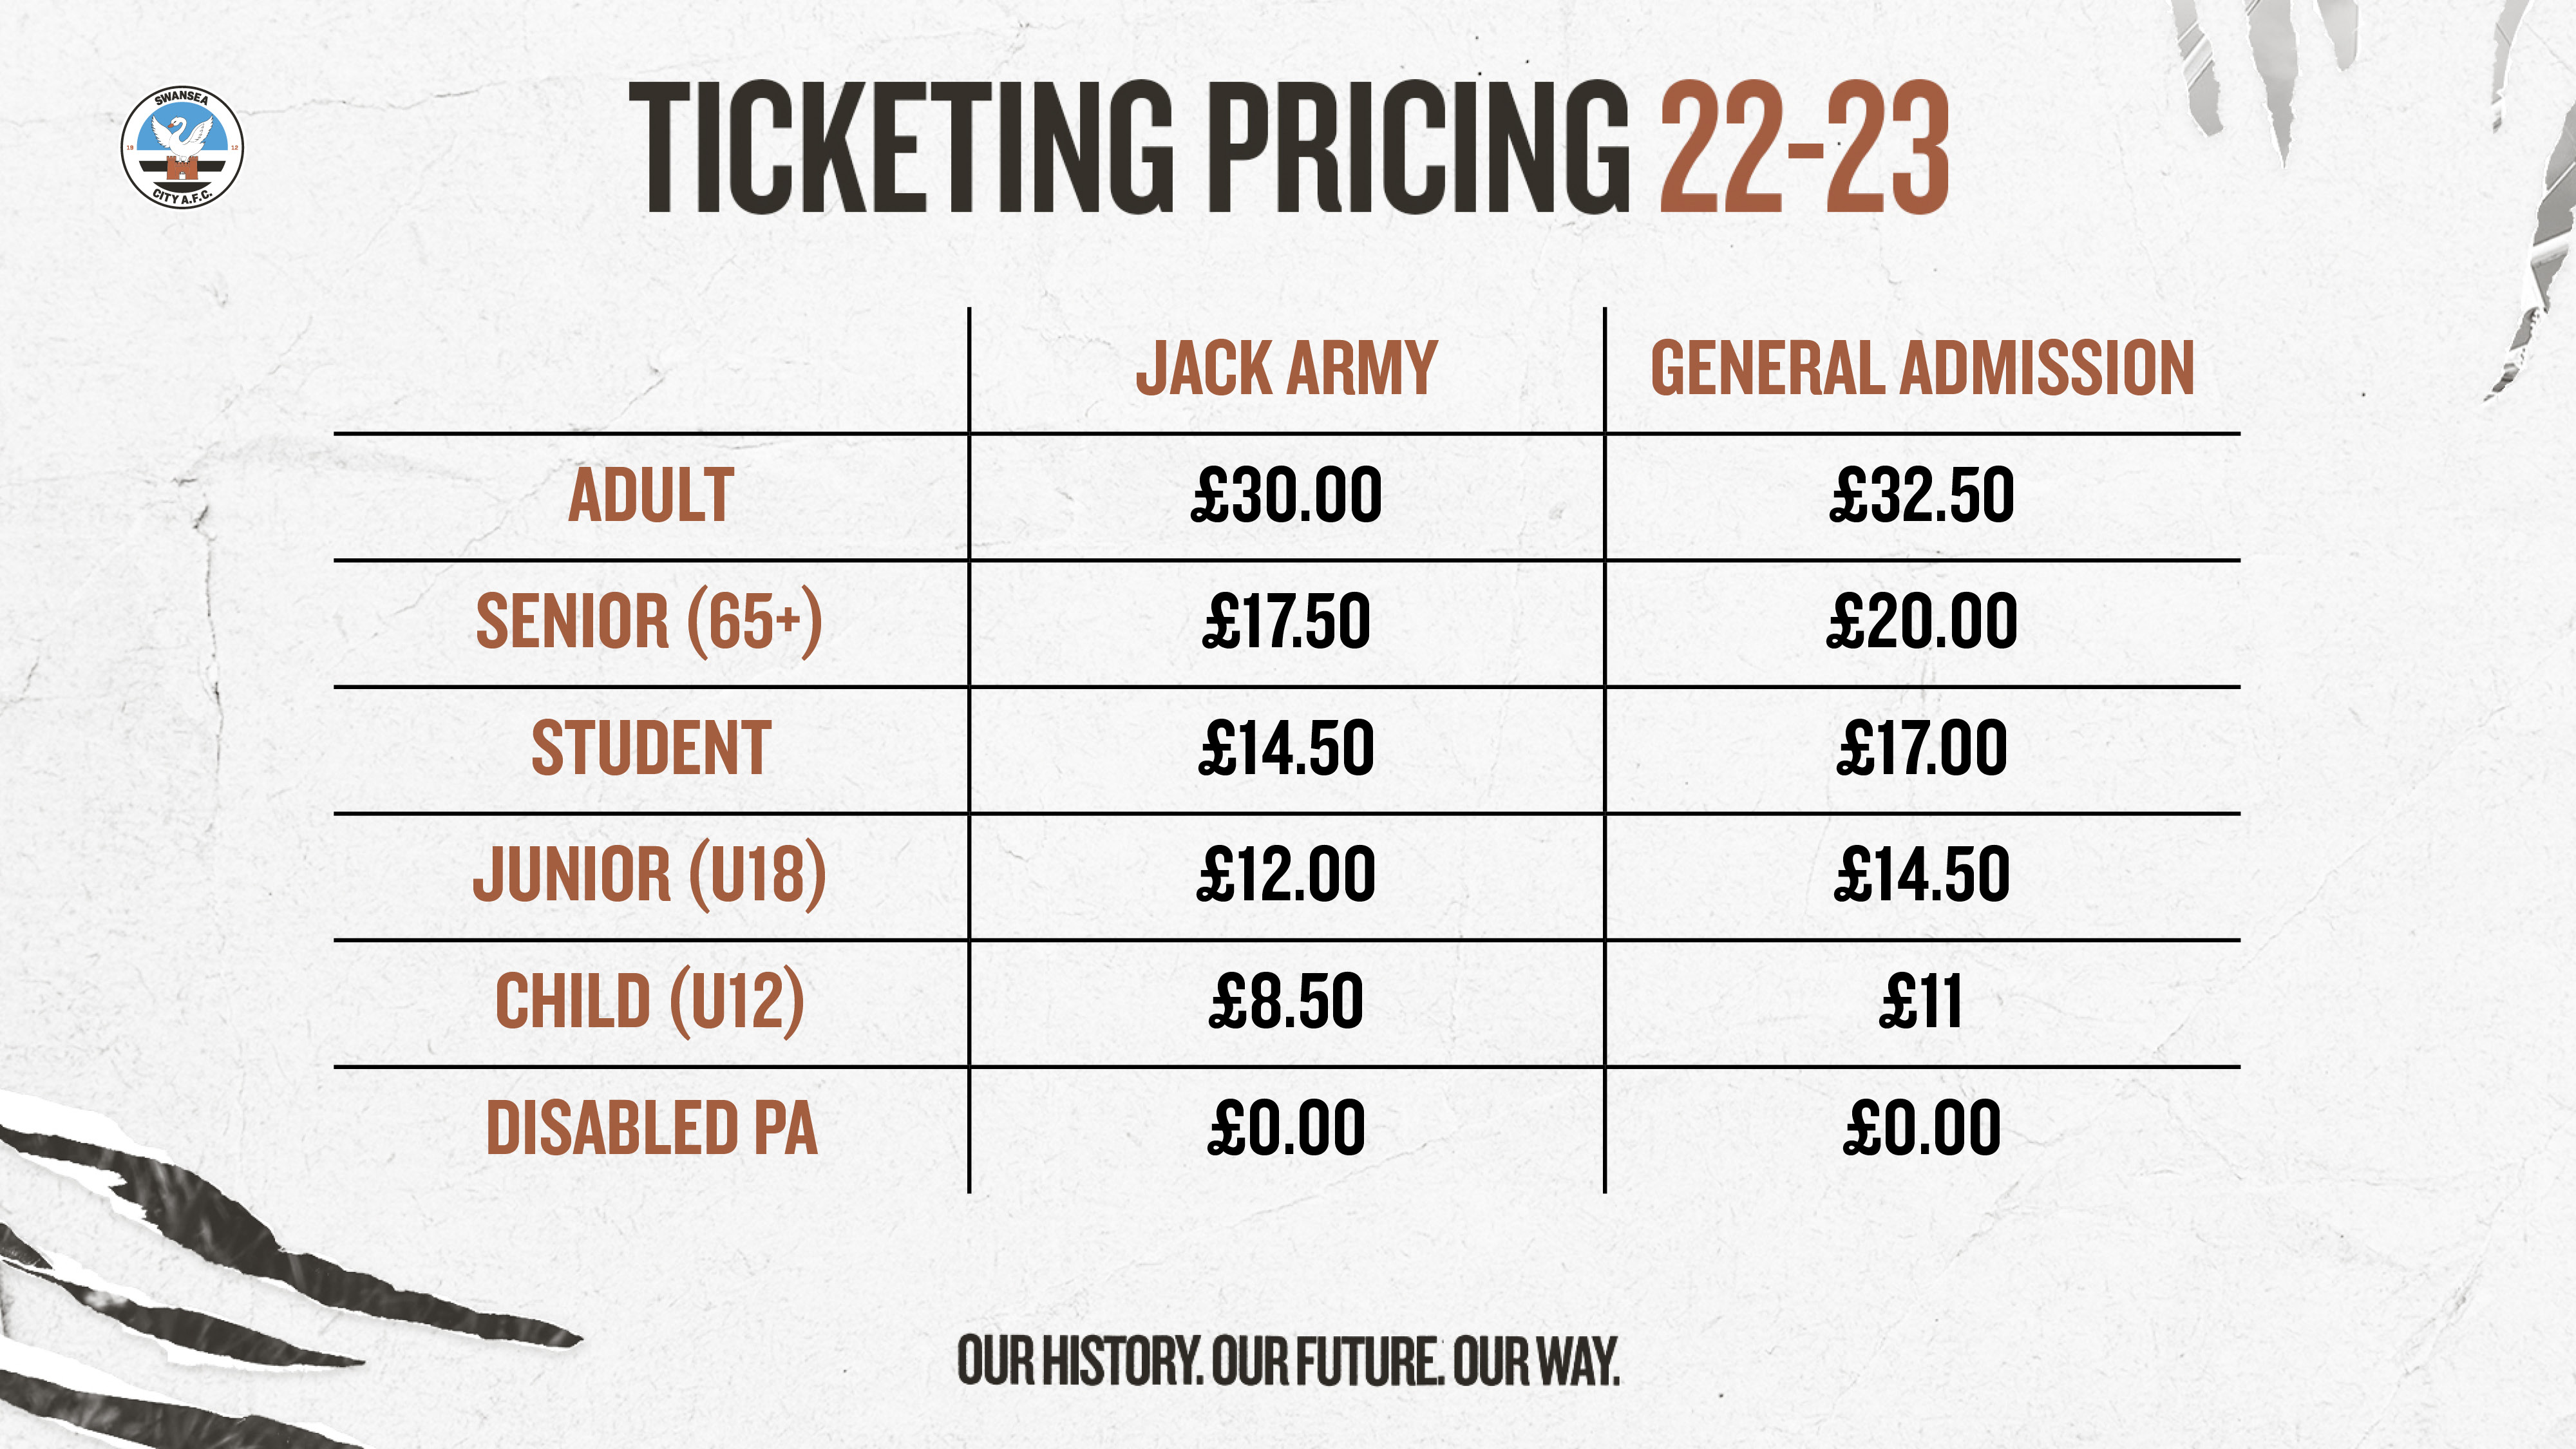 Ticket prices 22-23